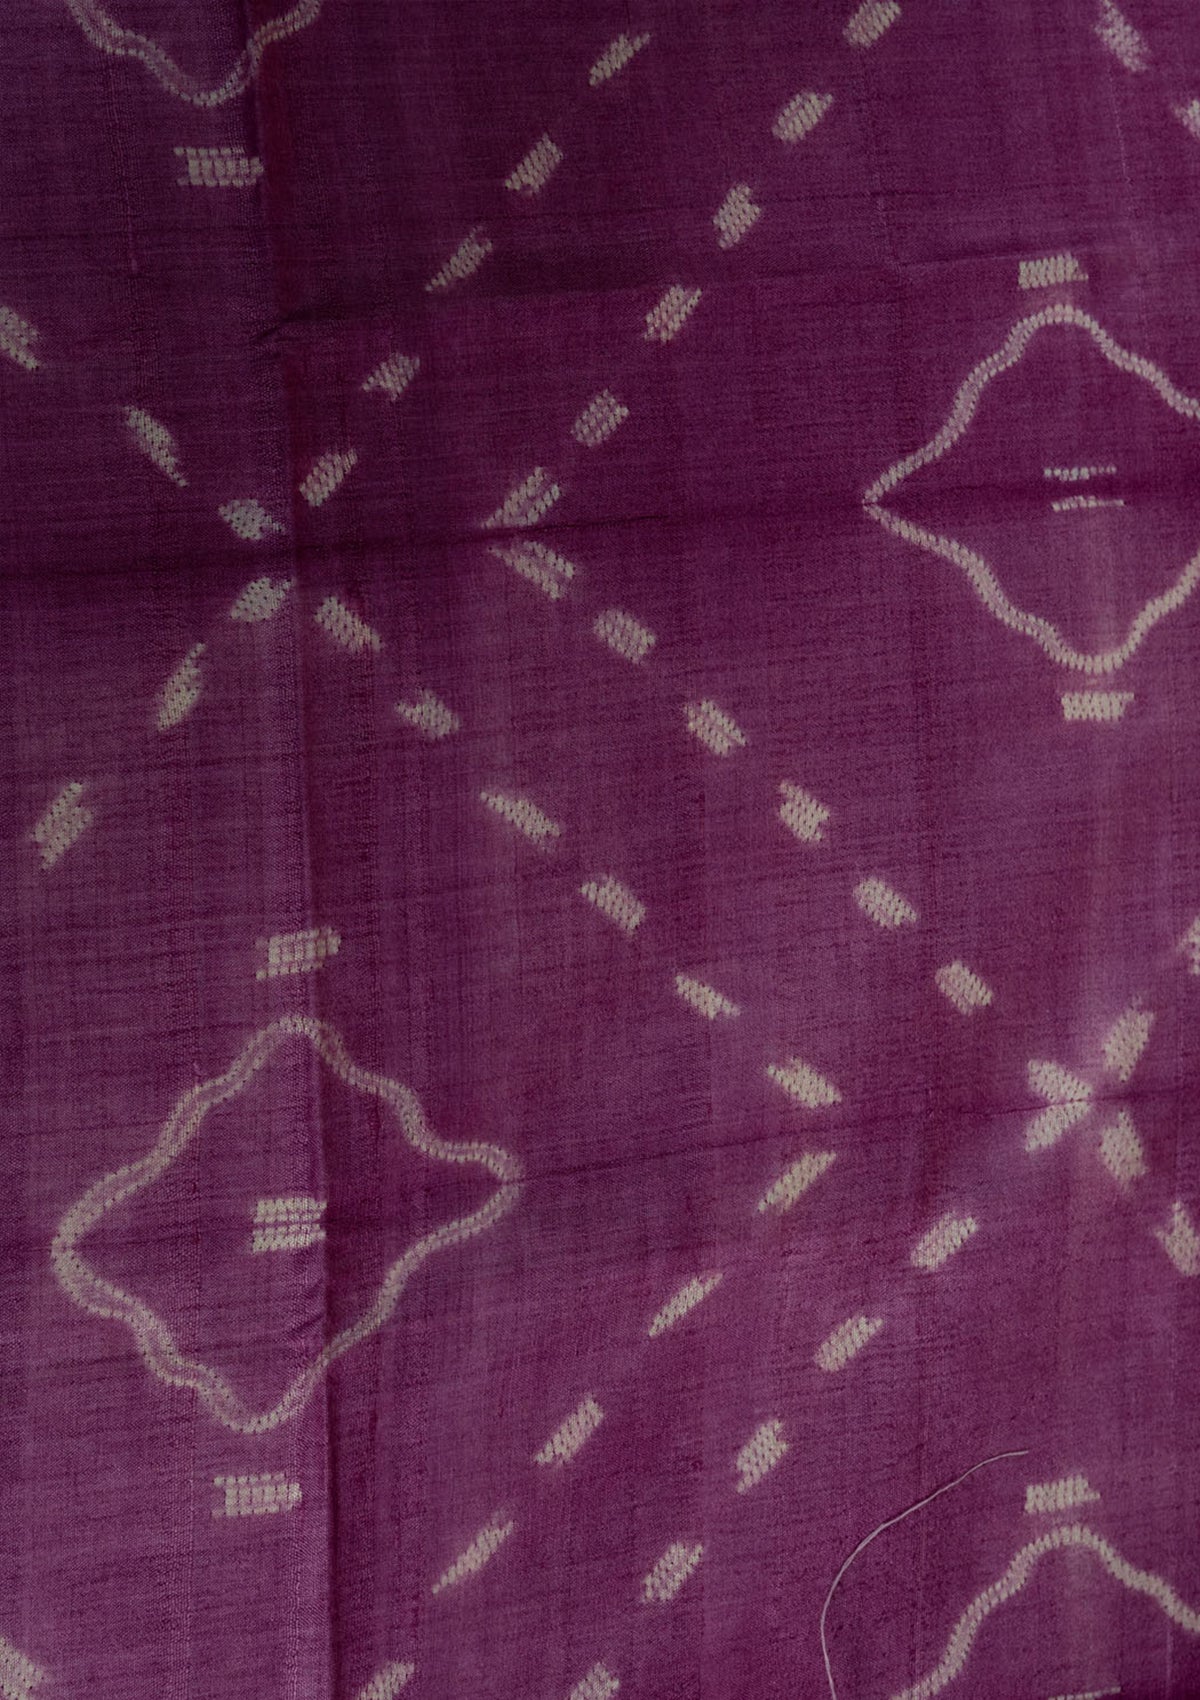 Handwoven Violet Shibori Fabric